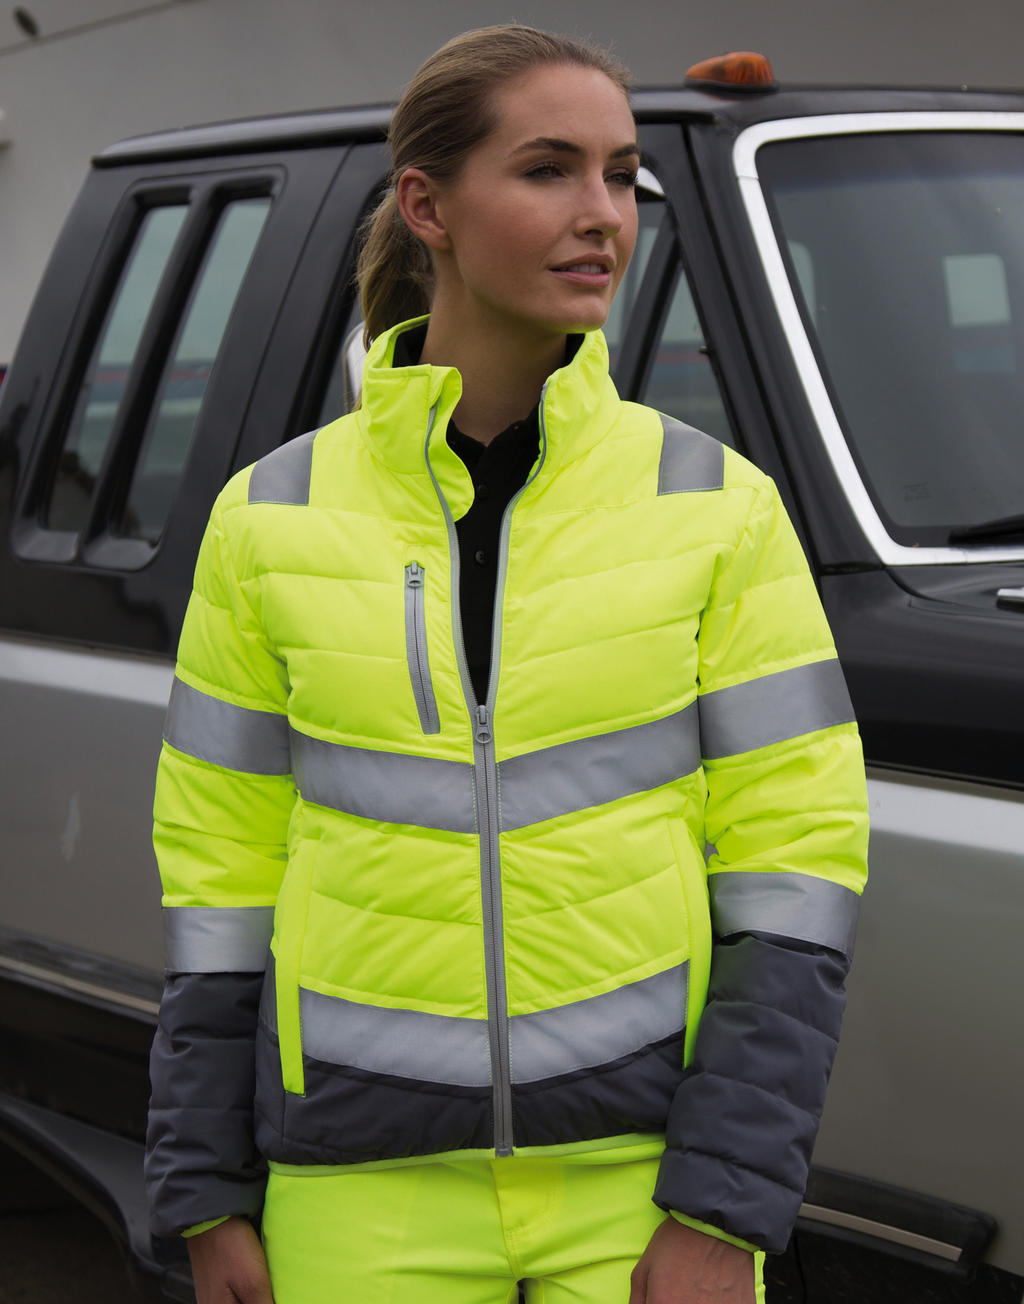 Women`s Soft Padded Safety Jacket